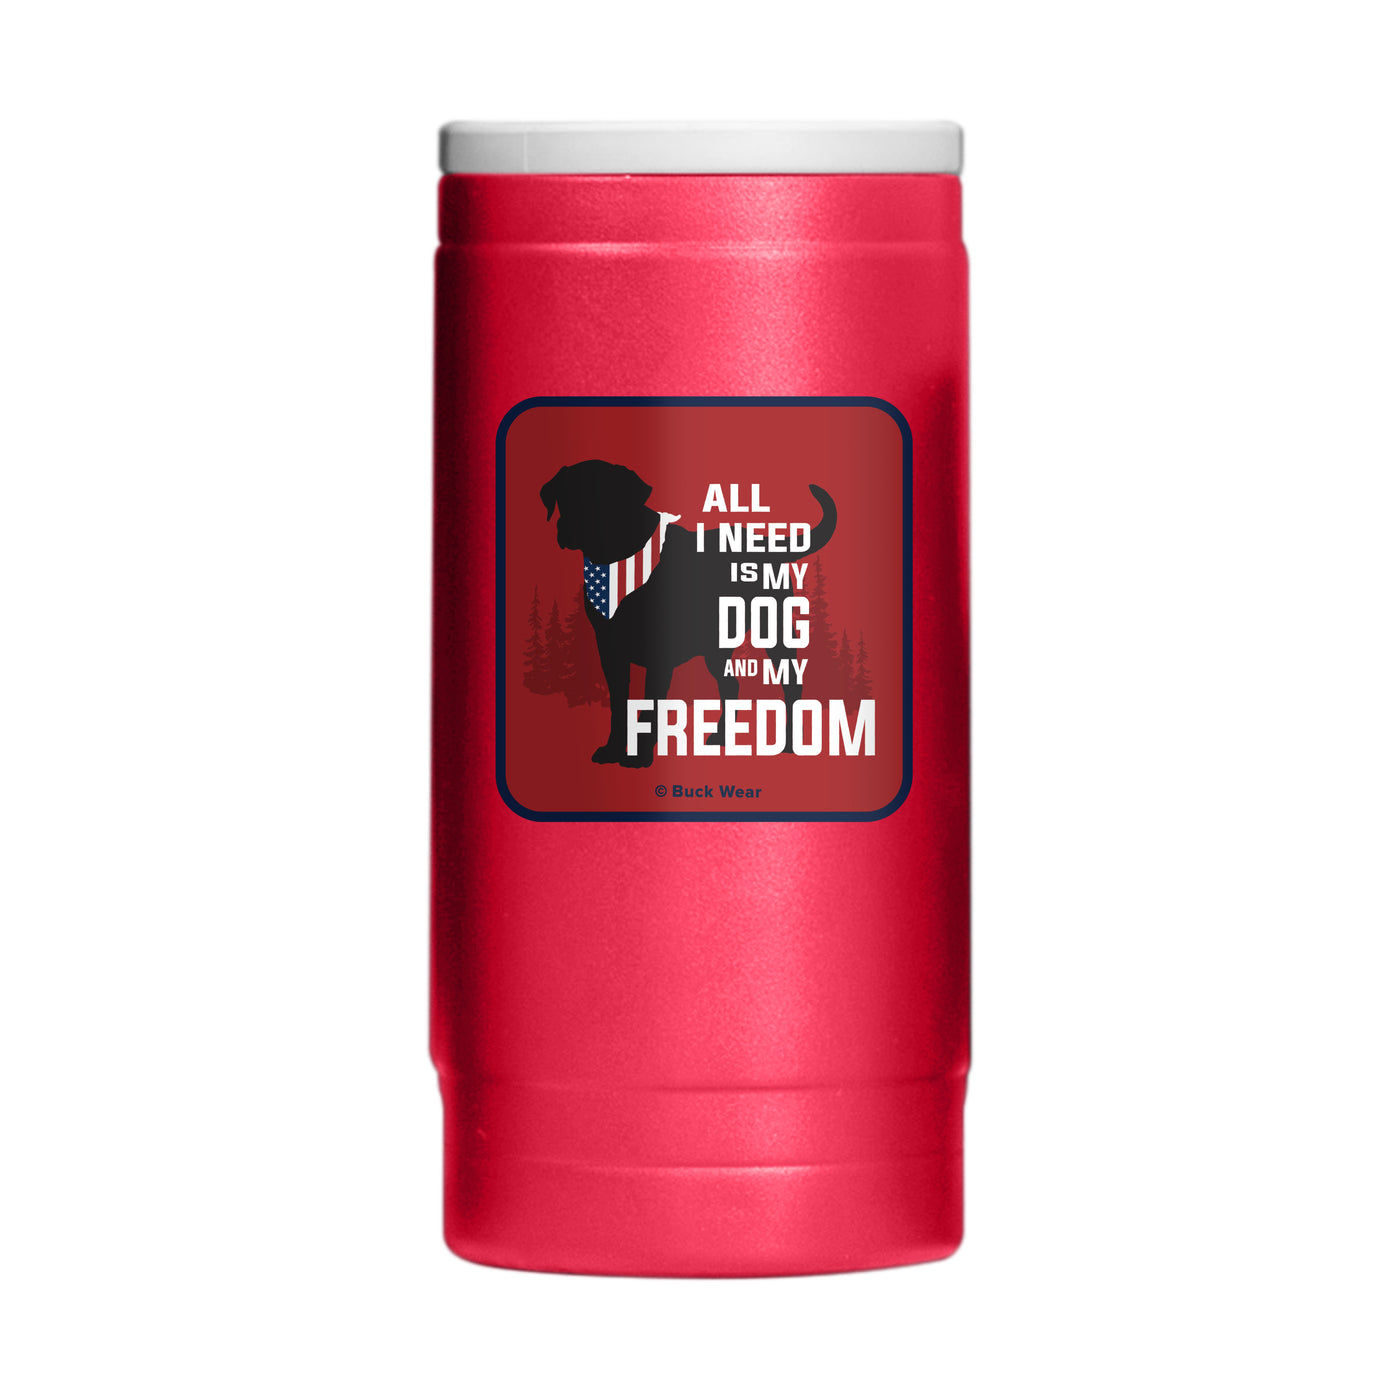 Freedom Dog 12oz Powder Coat Slim Can Coolie